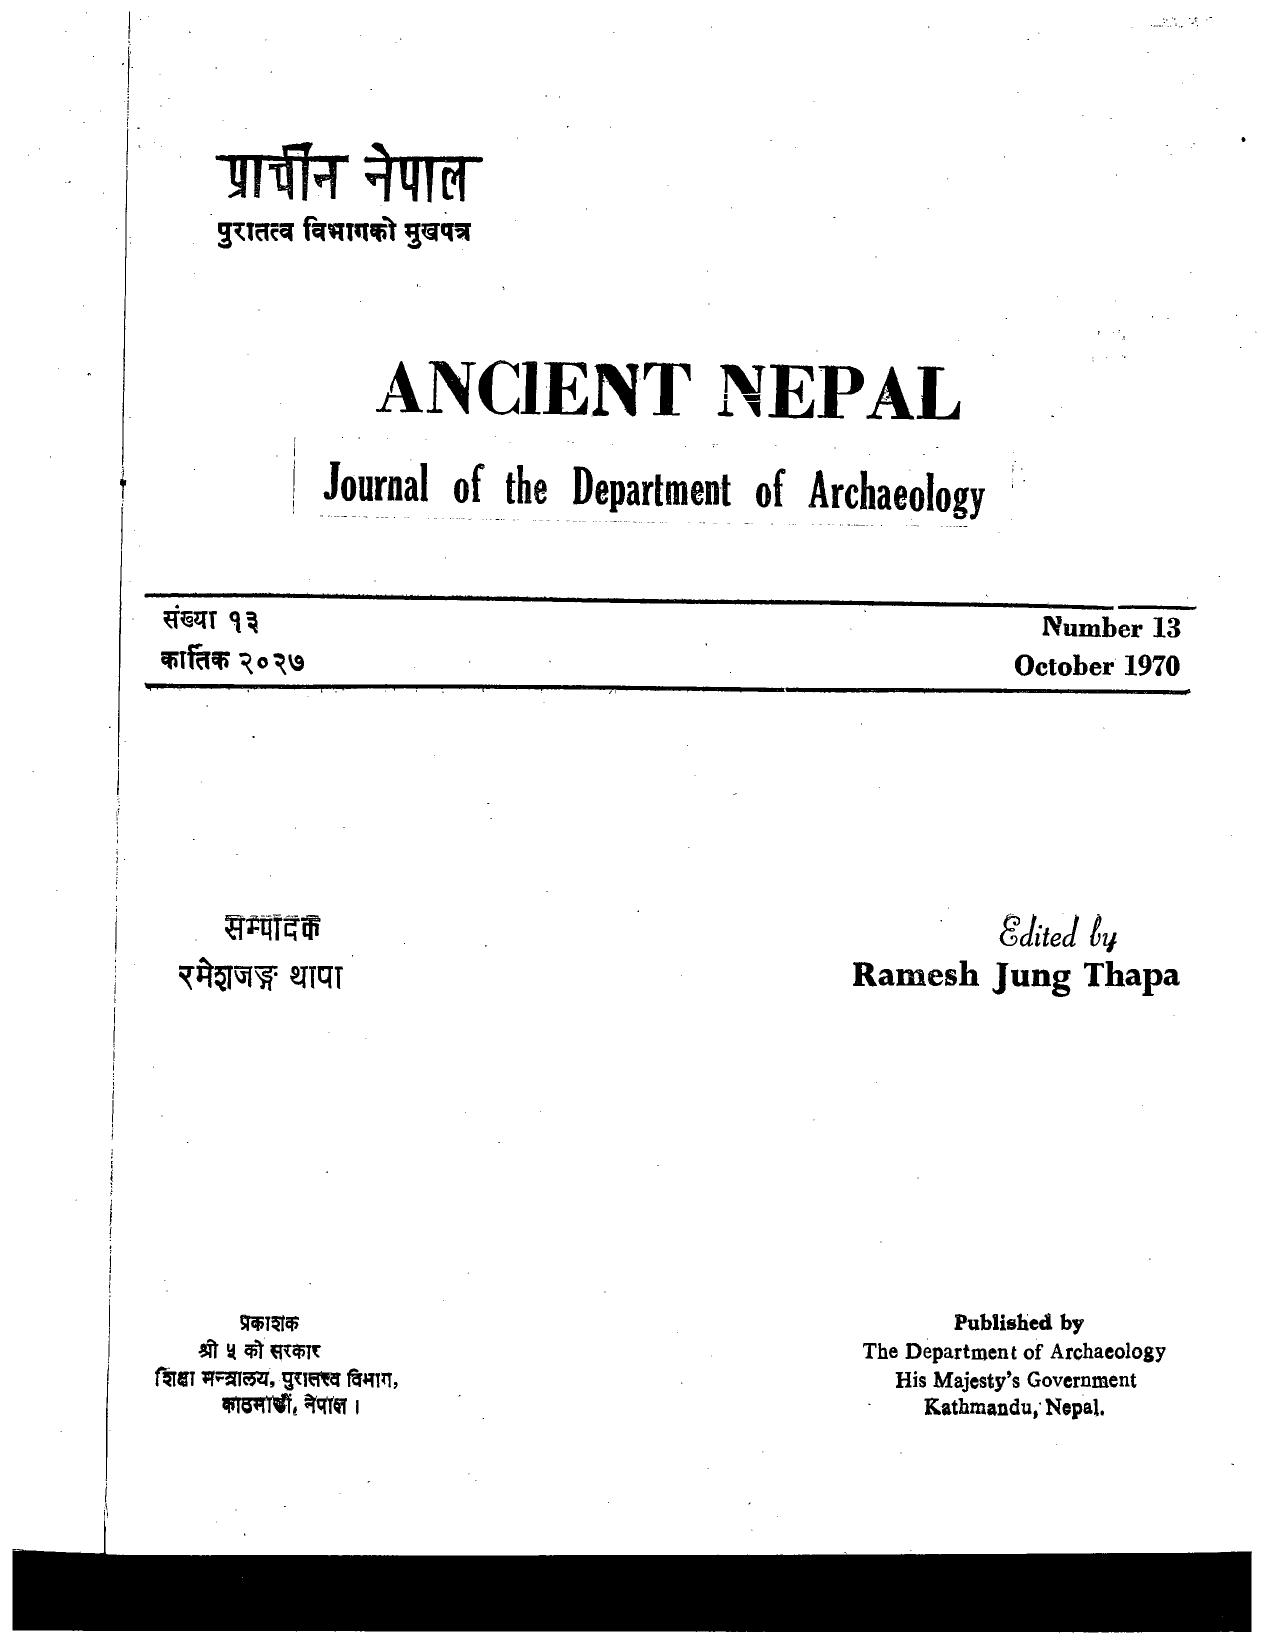 Ancient Nepal 13